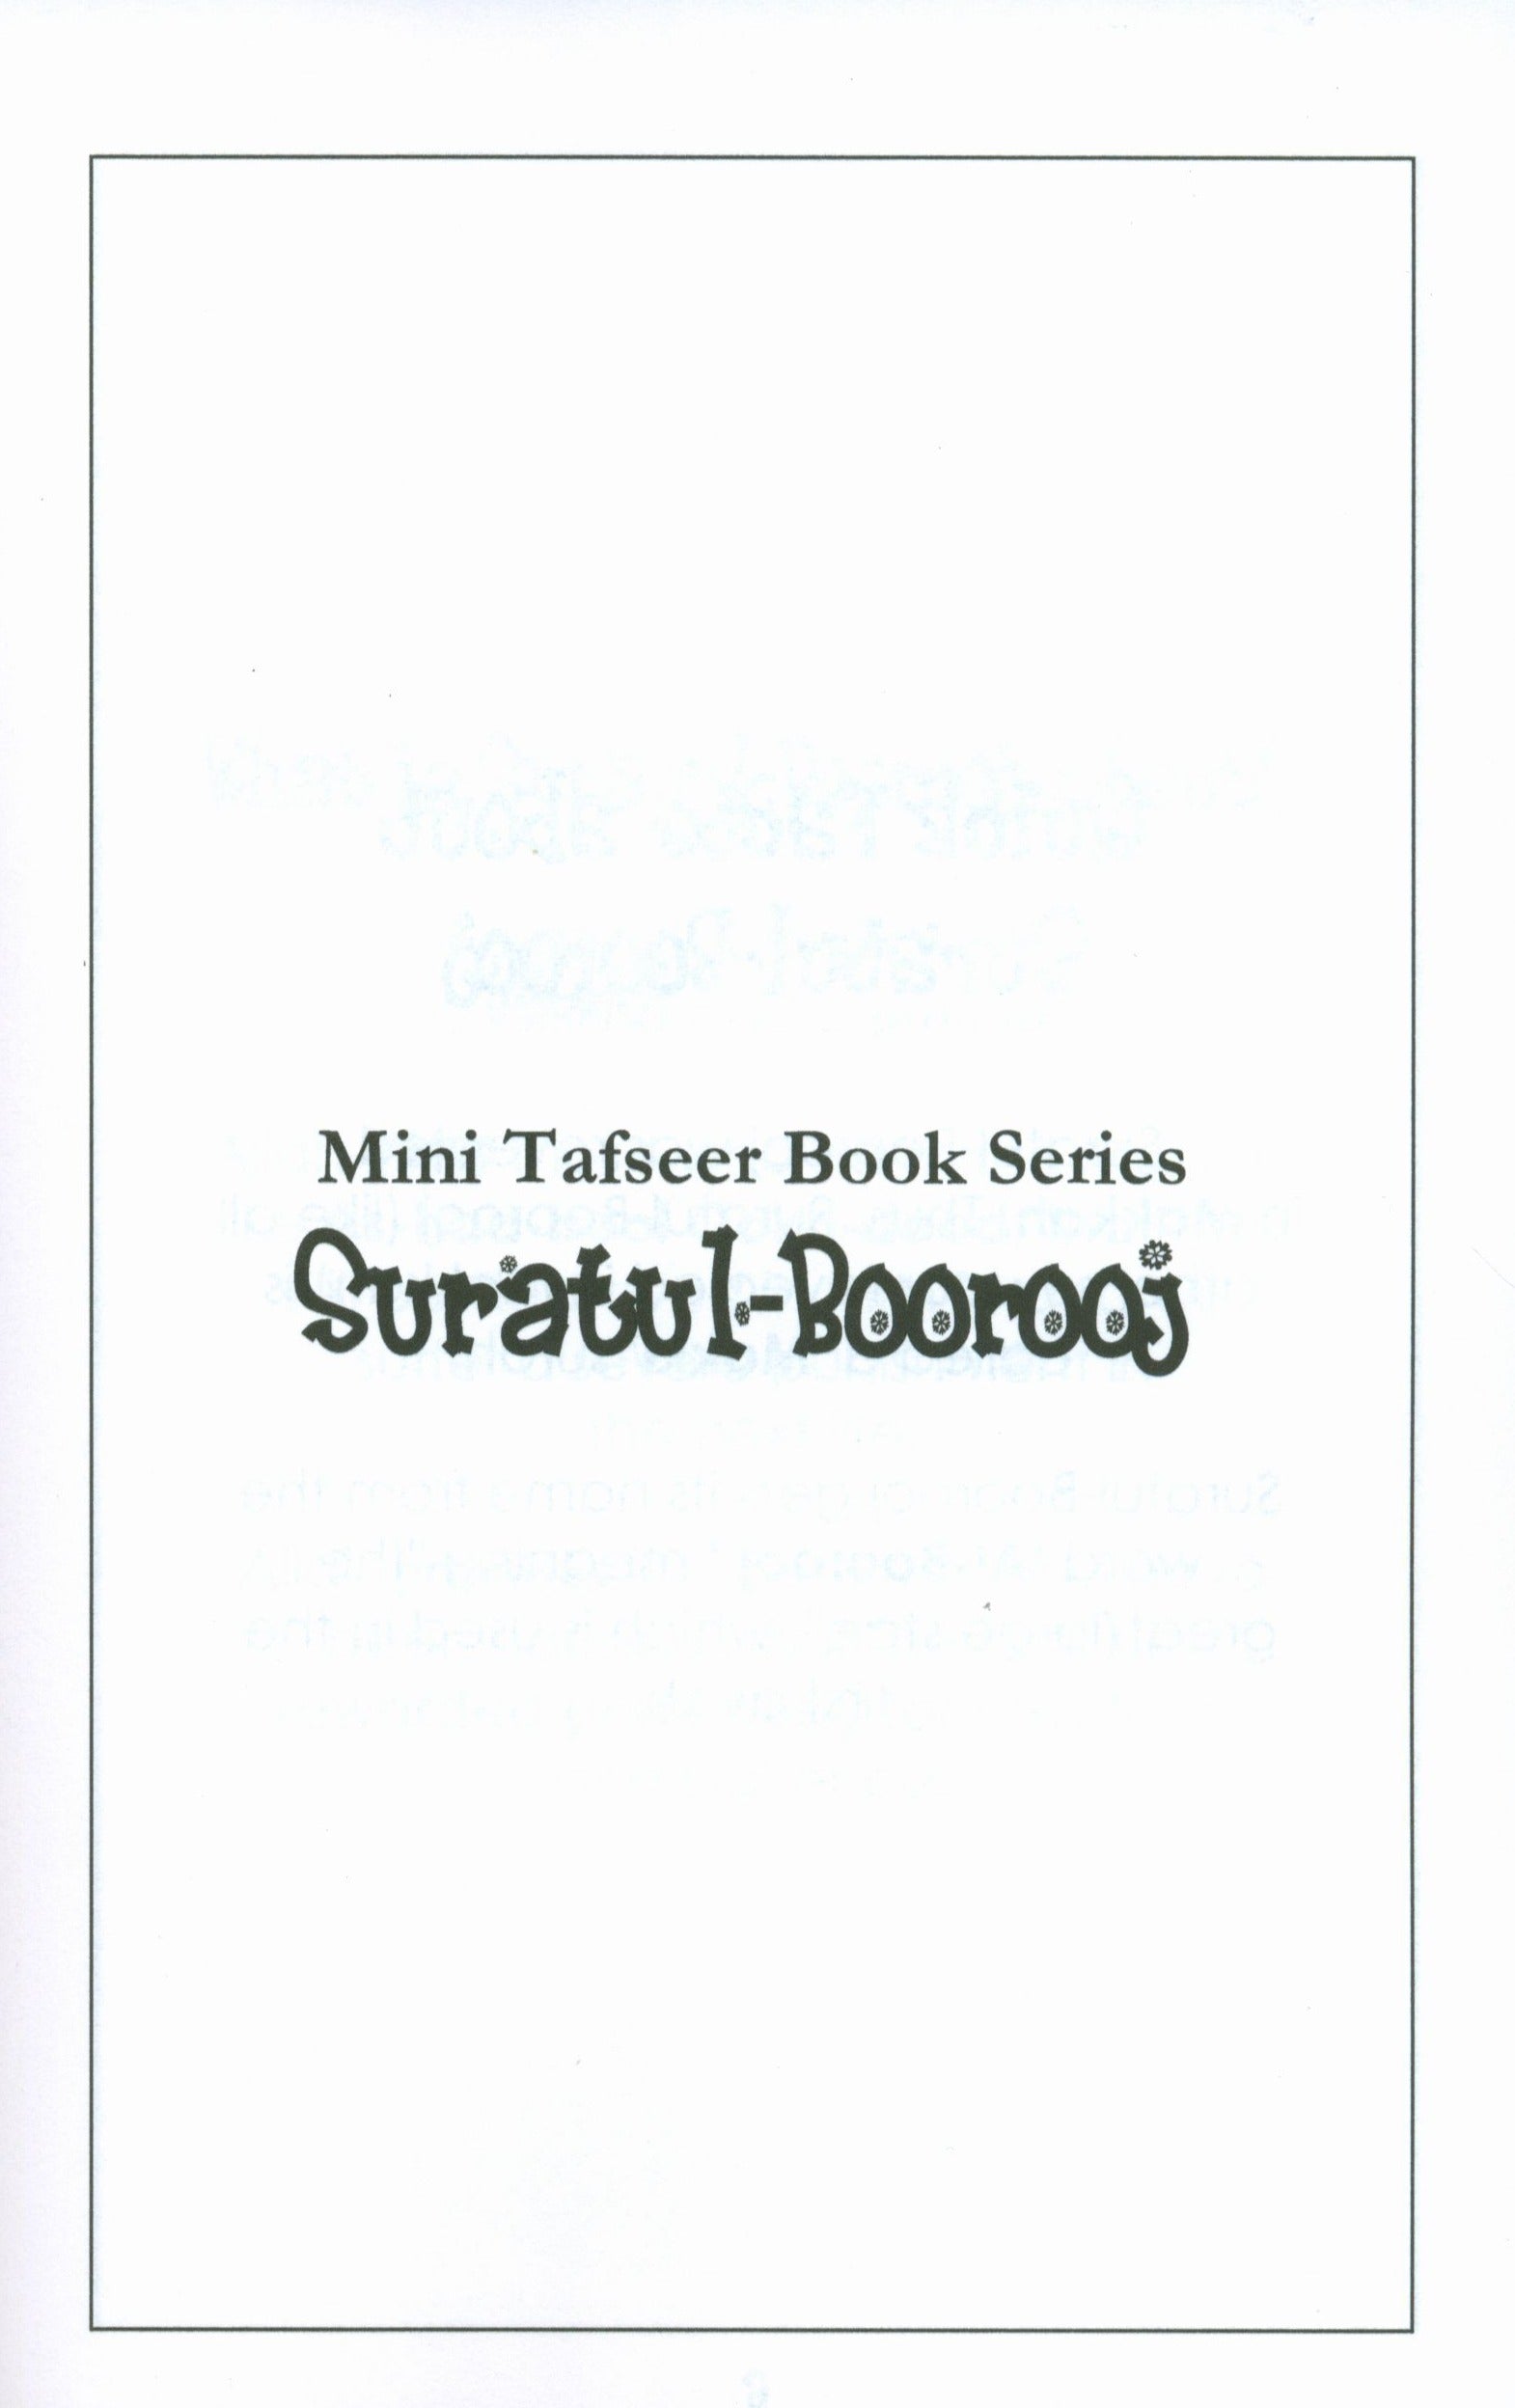 Mini Tafseer Book Suratul Boorooj (Surah 85)